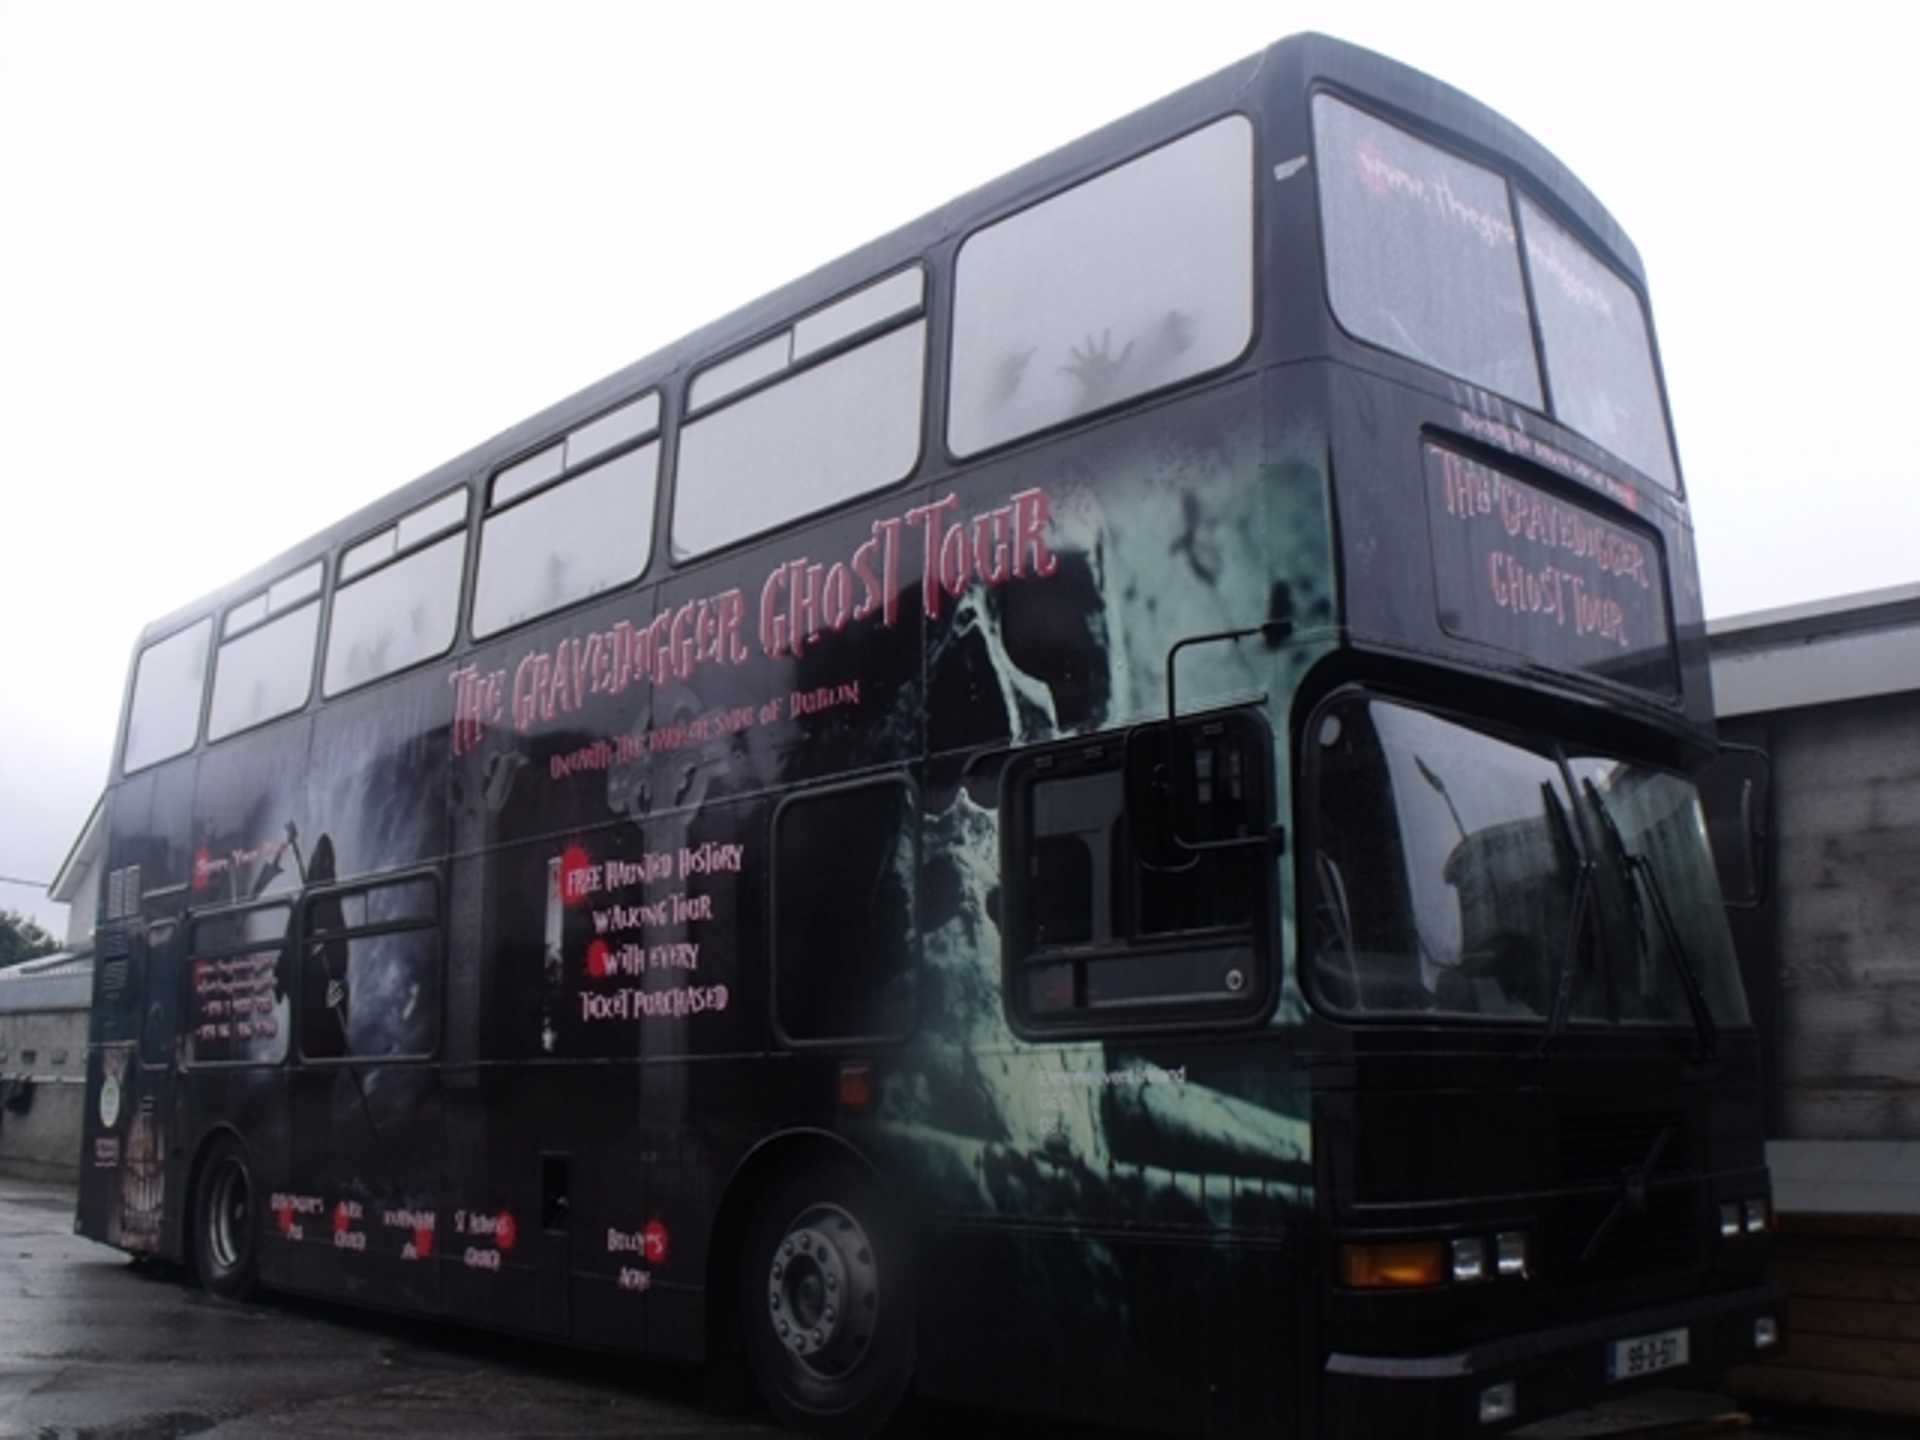 The Gravedigger Ghost Bus 